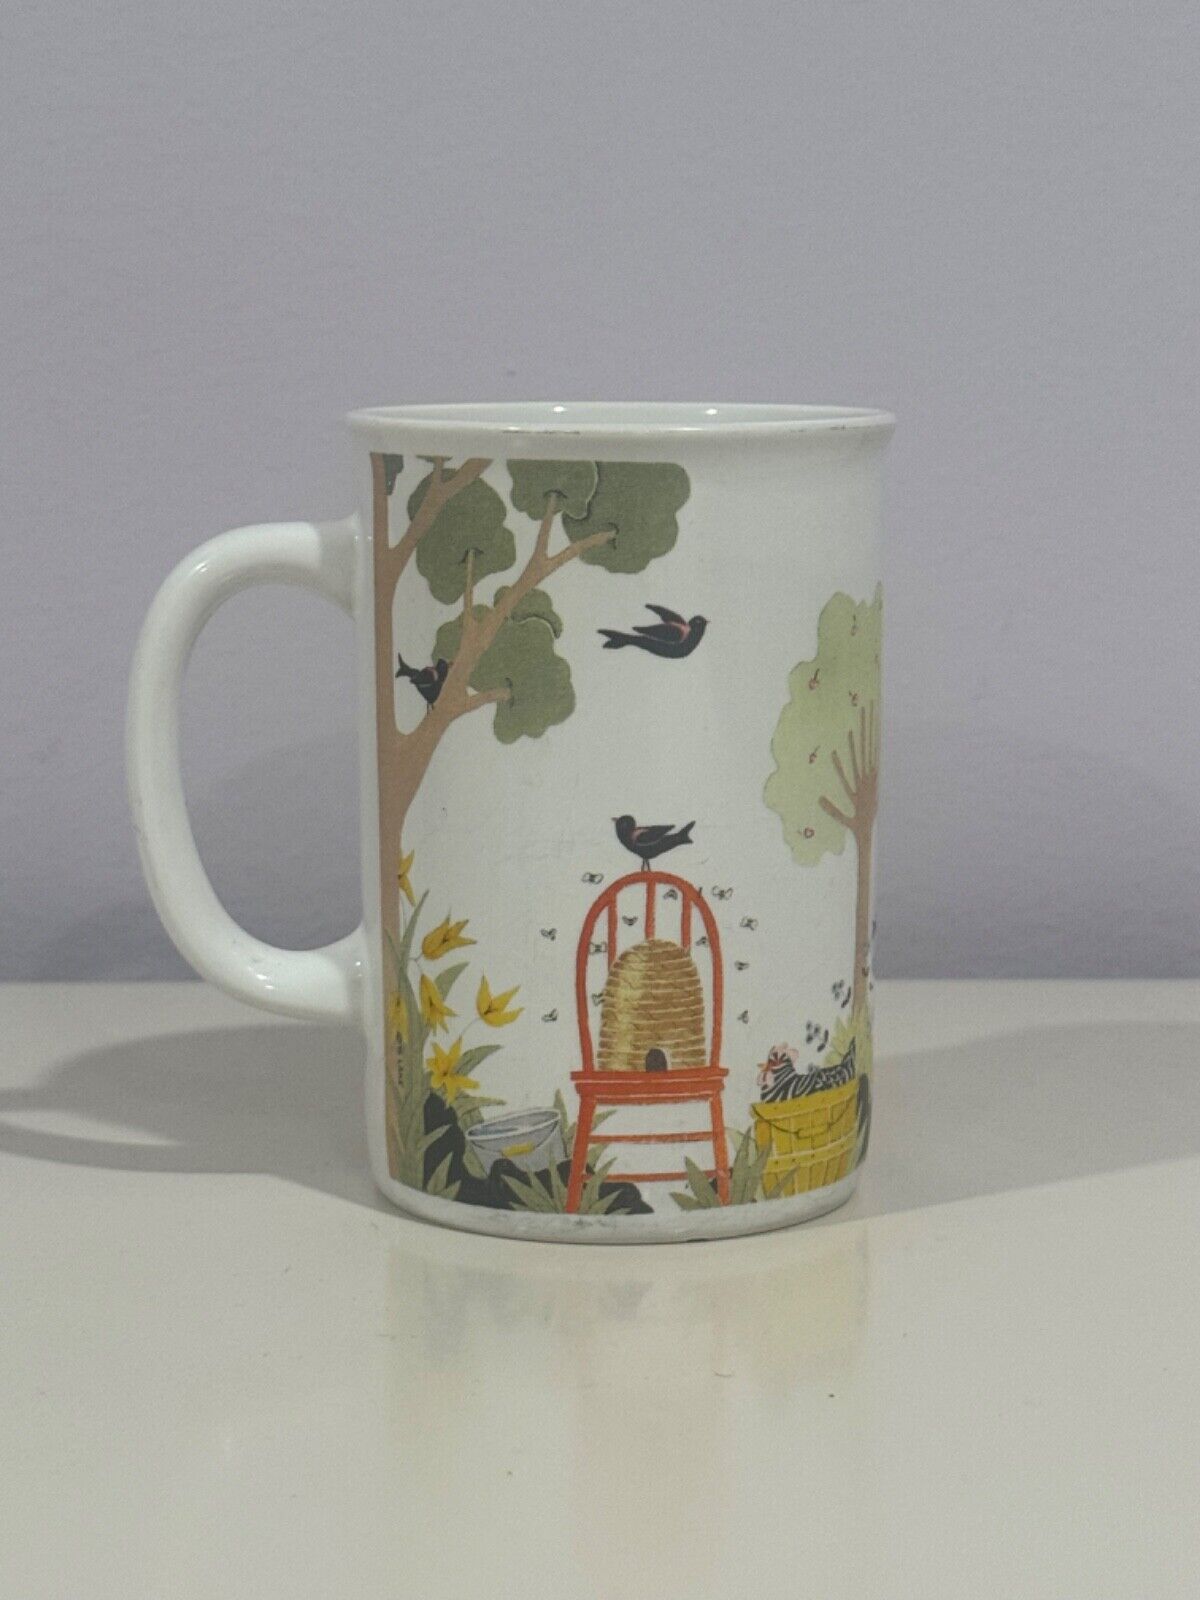 Vintage Otigiri Mug Coffee Mug Tea Drinker Gift Garden Scene Collector Rare Find